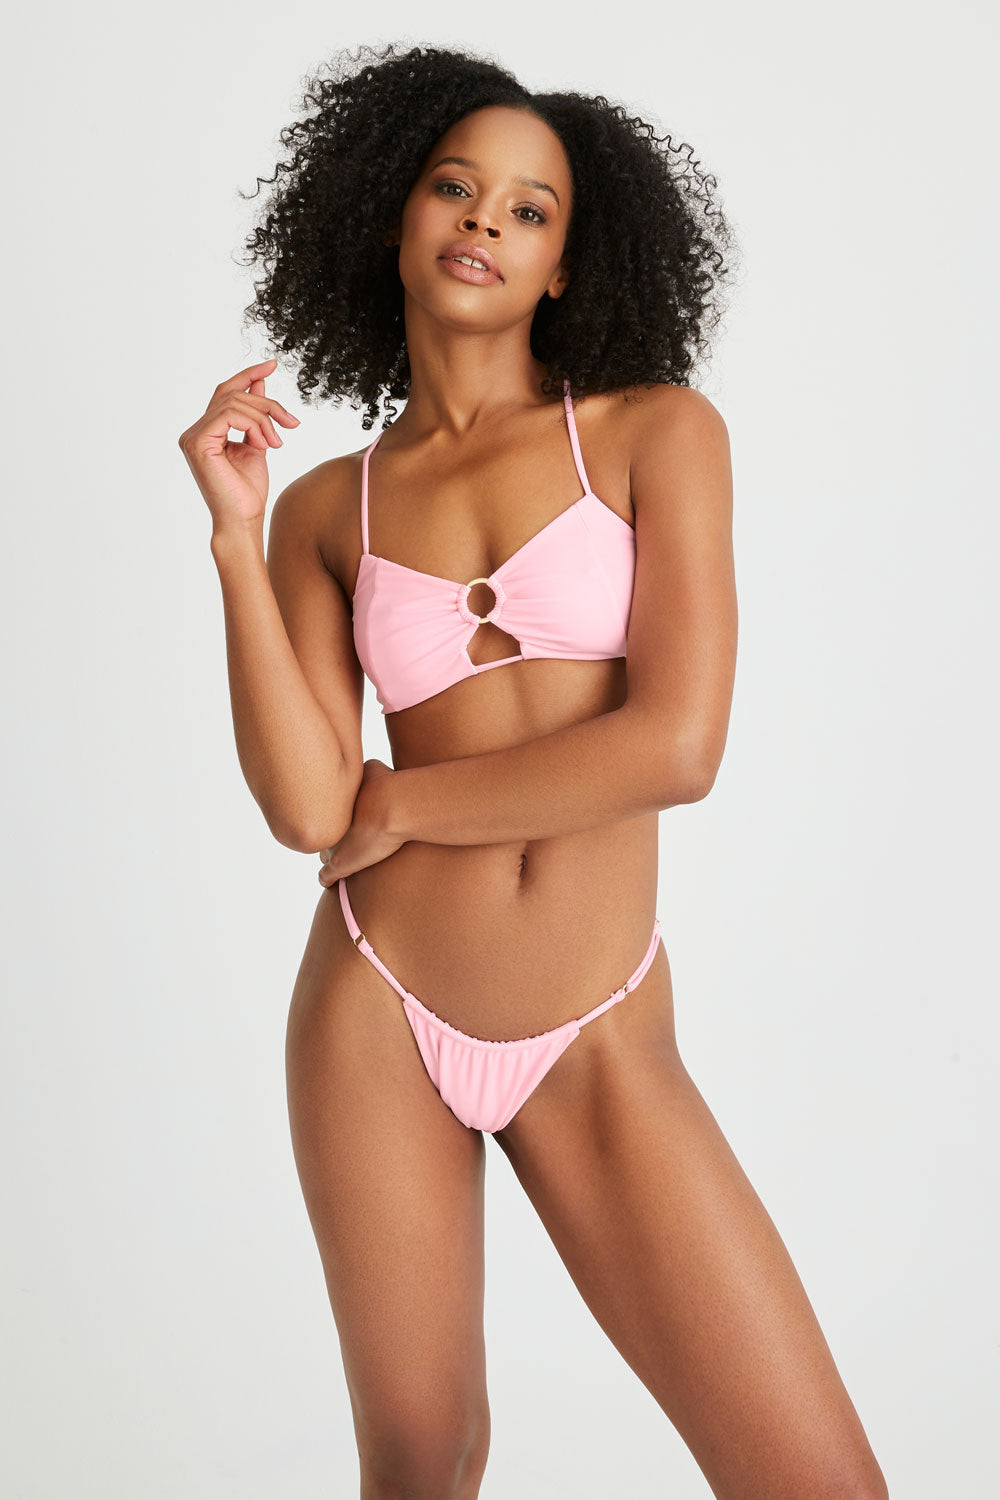 Women stands wearing pink sustainable bikini sets